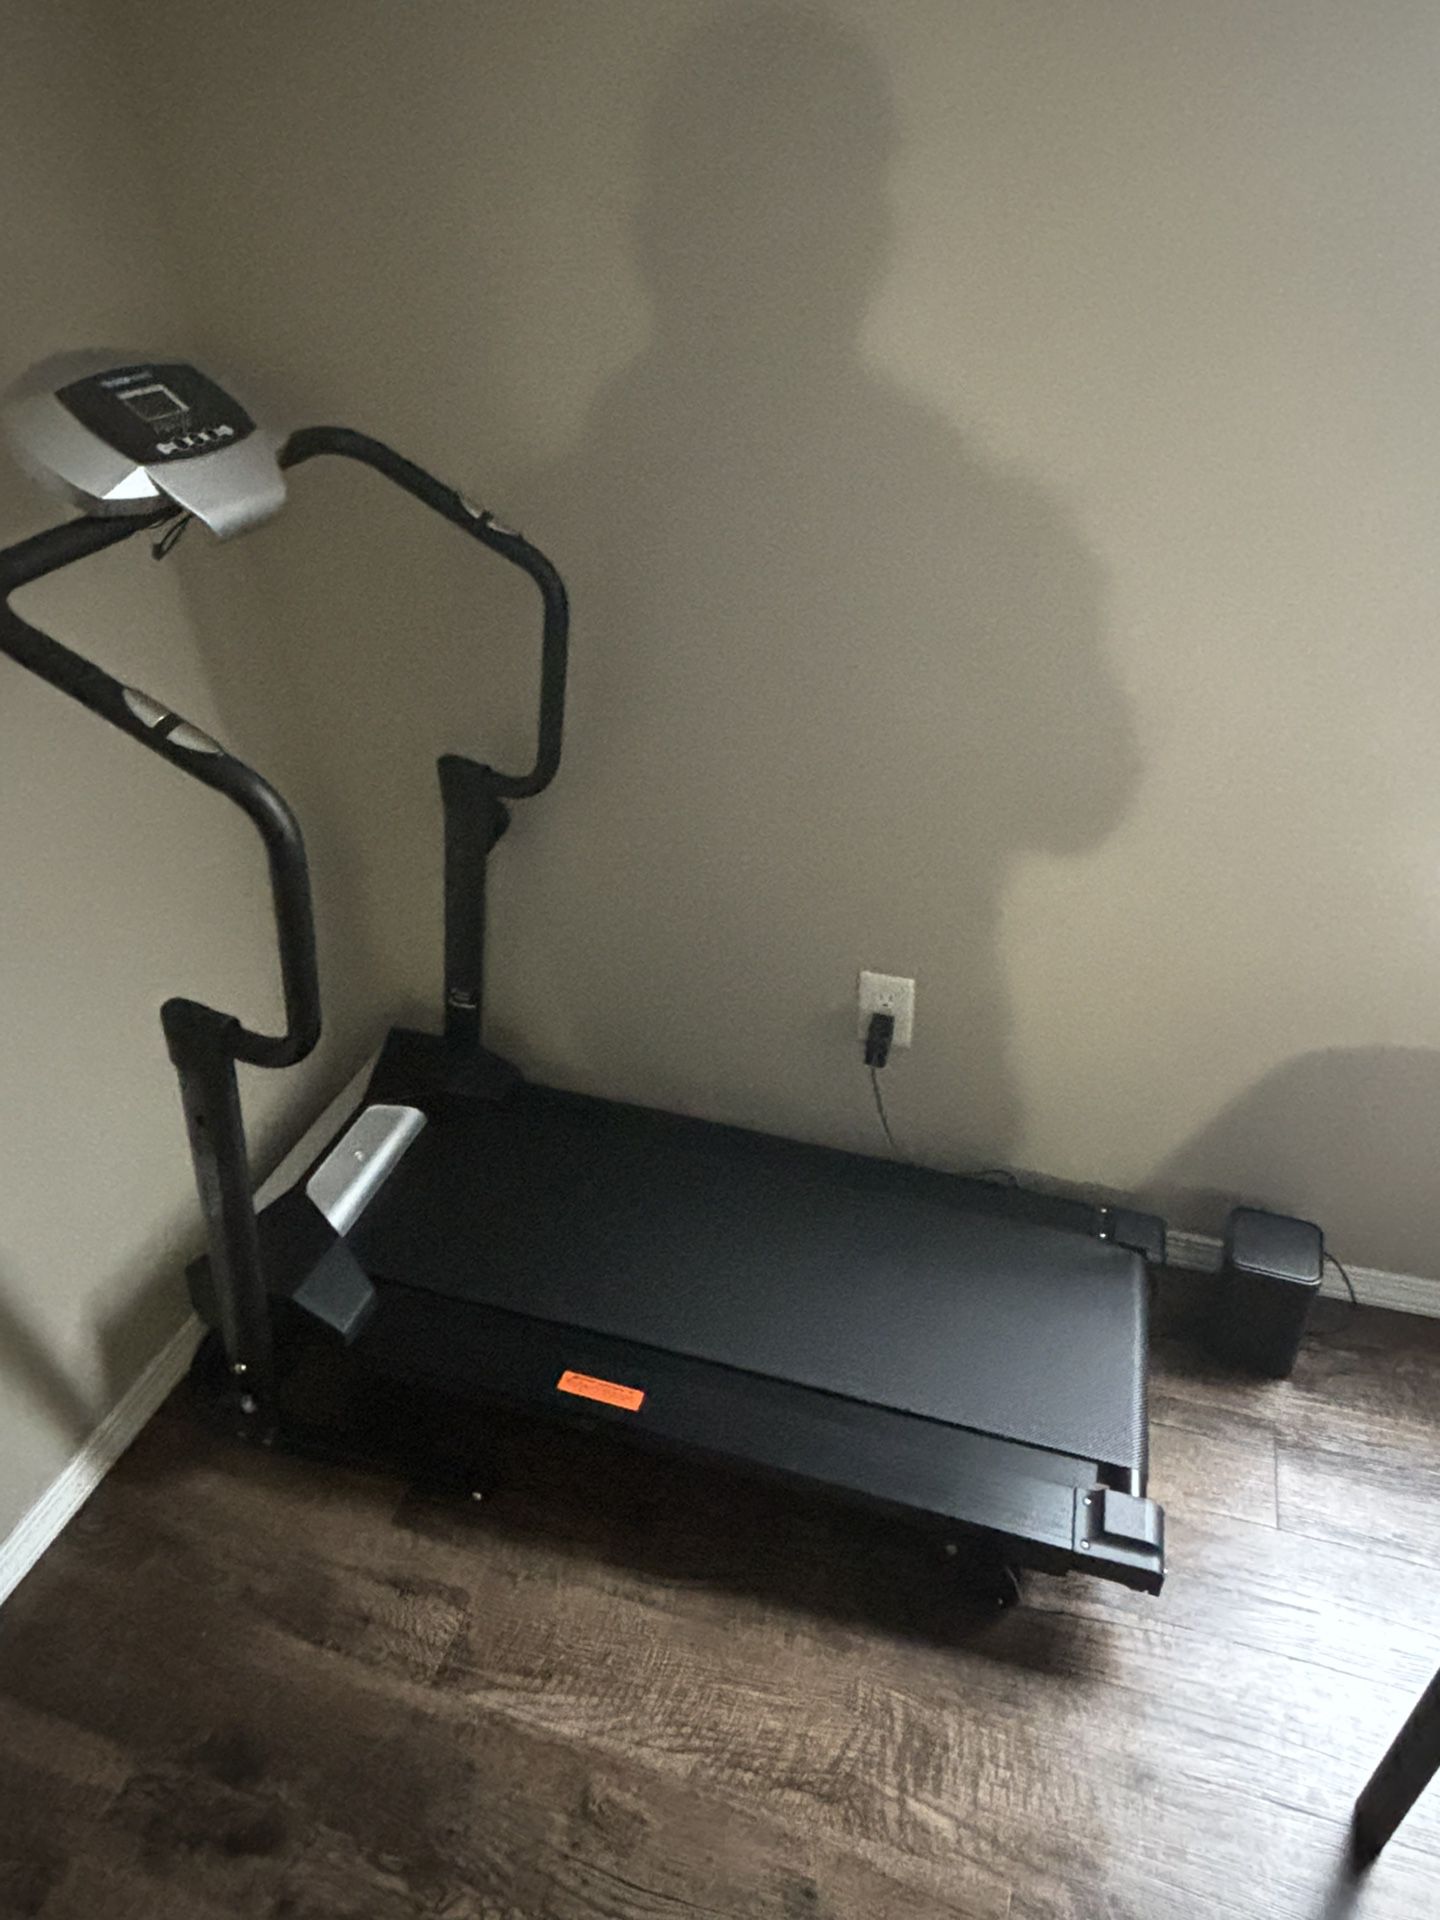 New Treadmill